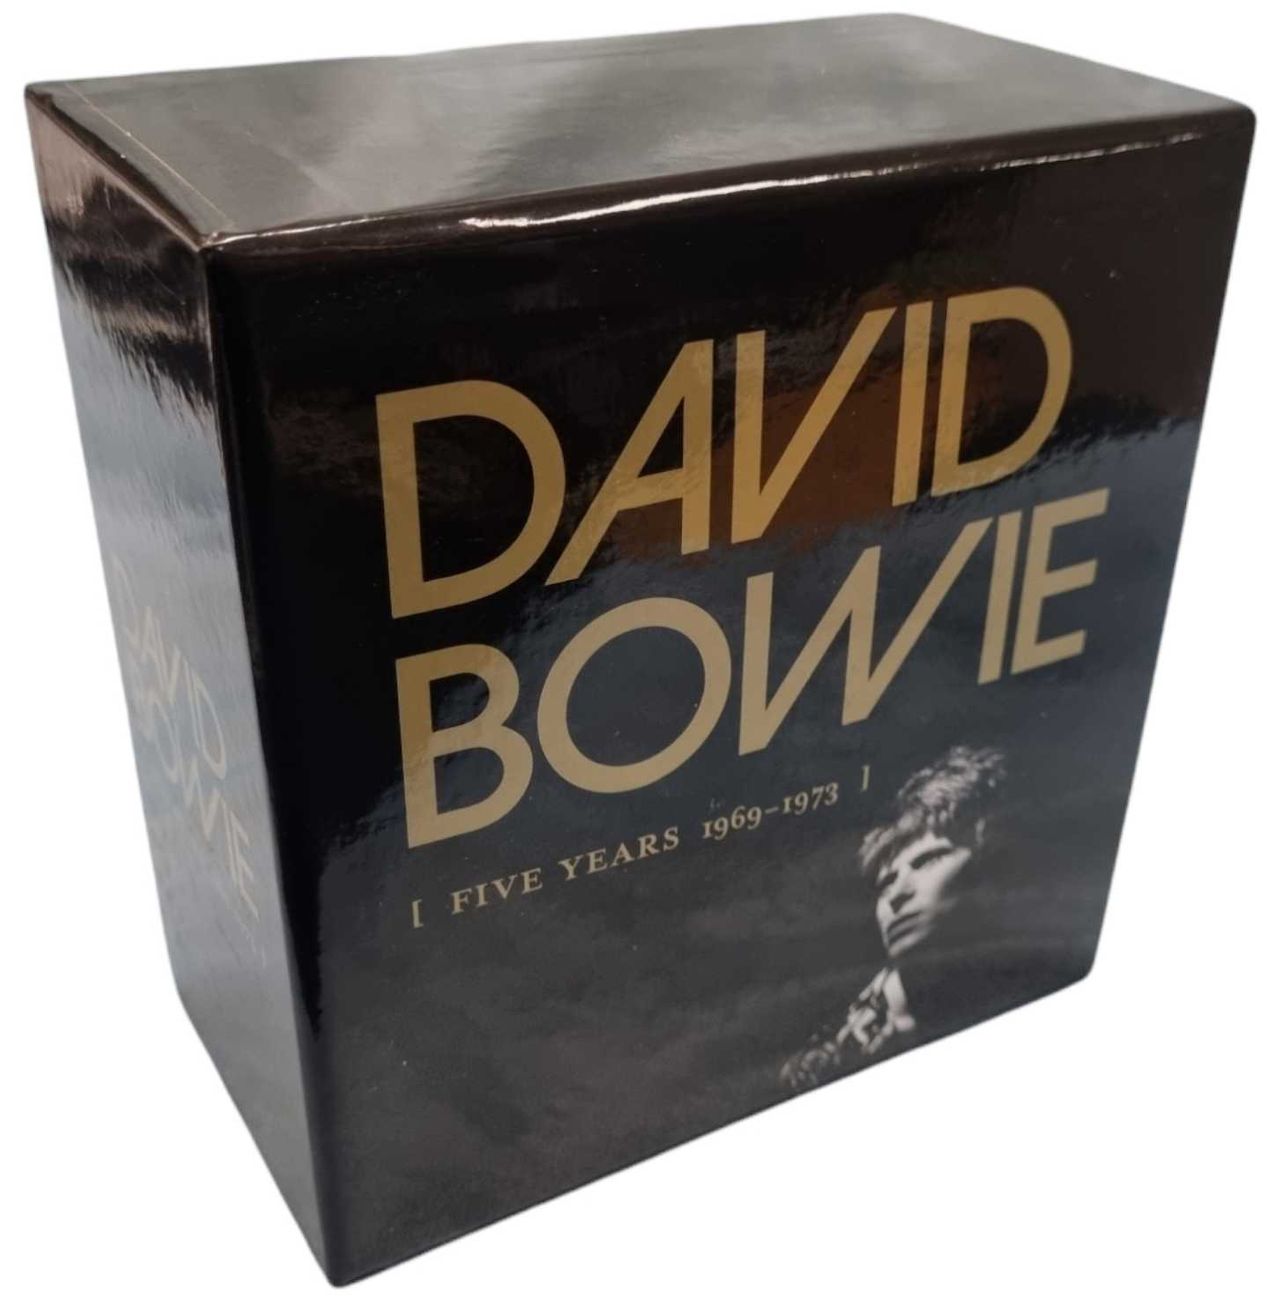 David Bowie Five Years 1969-1973 UK CD Album Box Set DBX1